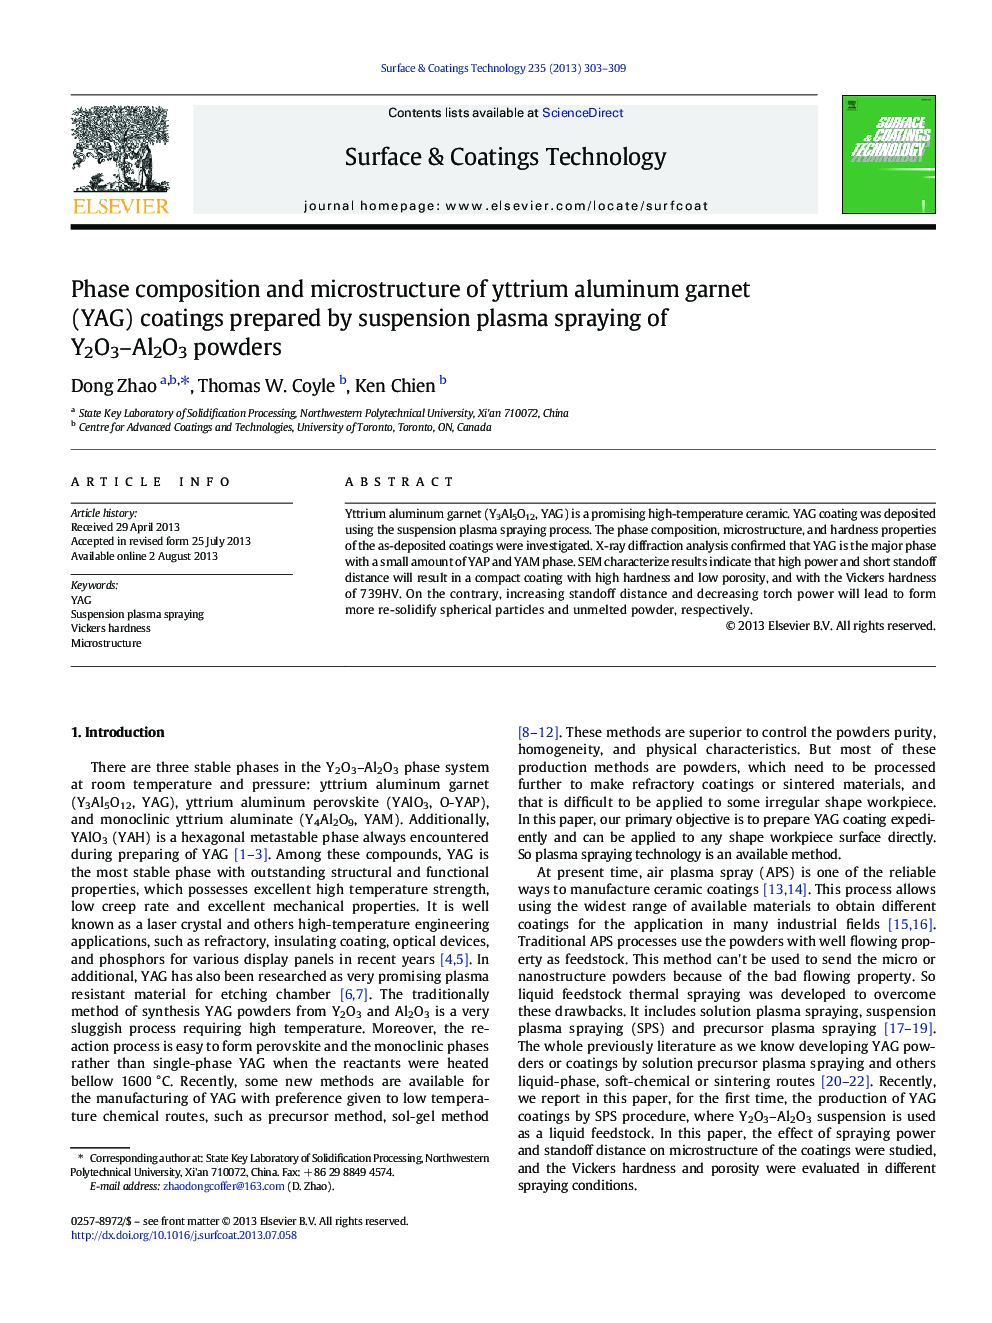 Phase composition and microstructure of yttrium aluminum garnet (YAG) coatings prepared by suspension plasma spraying of Y2O3-Al2O3 powders